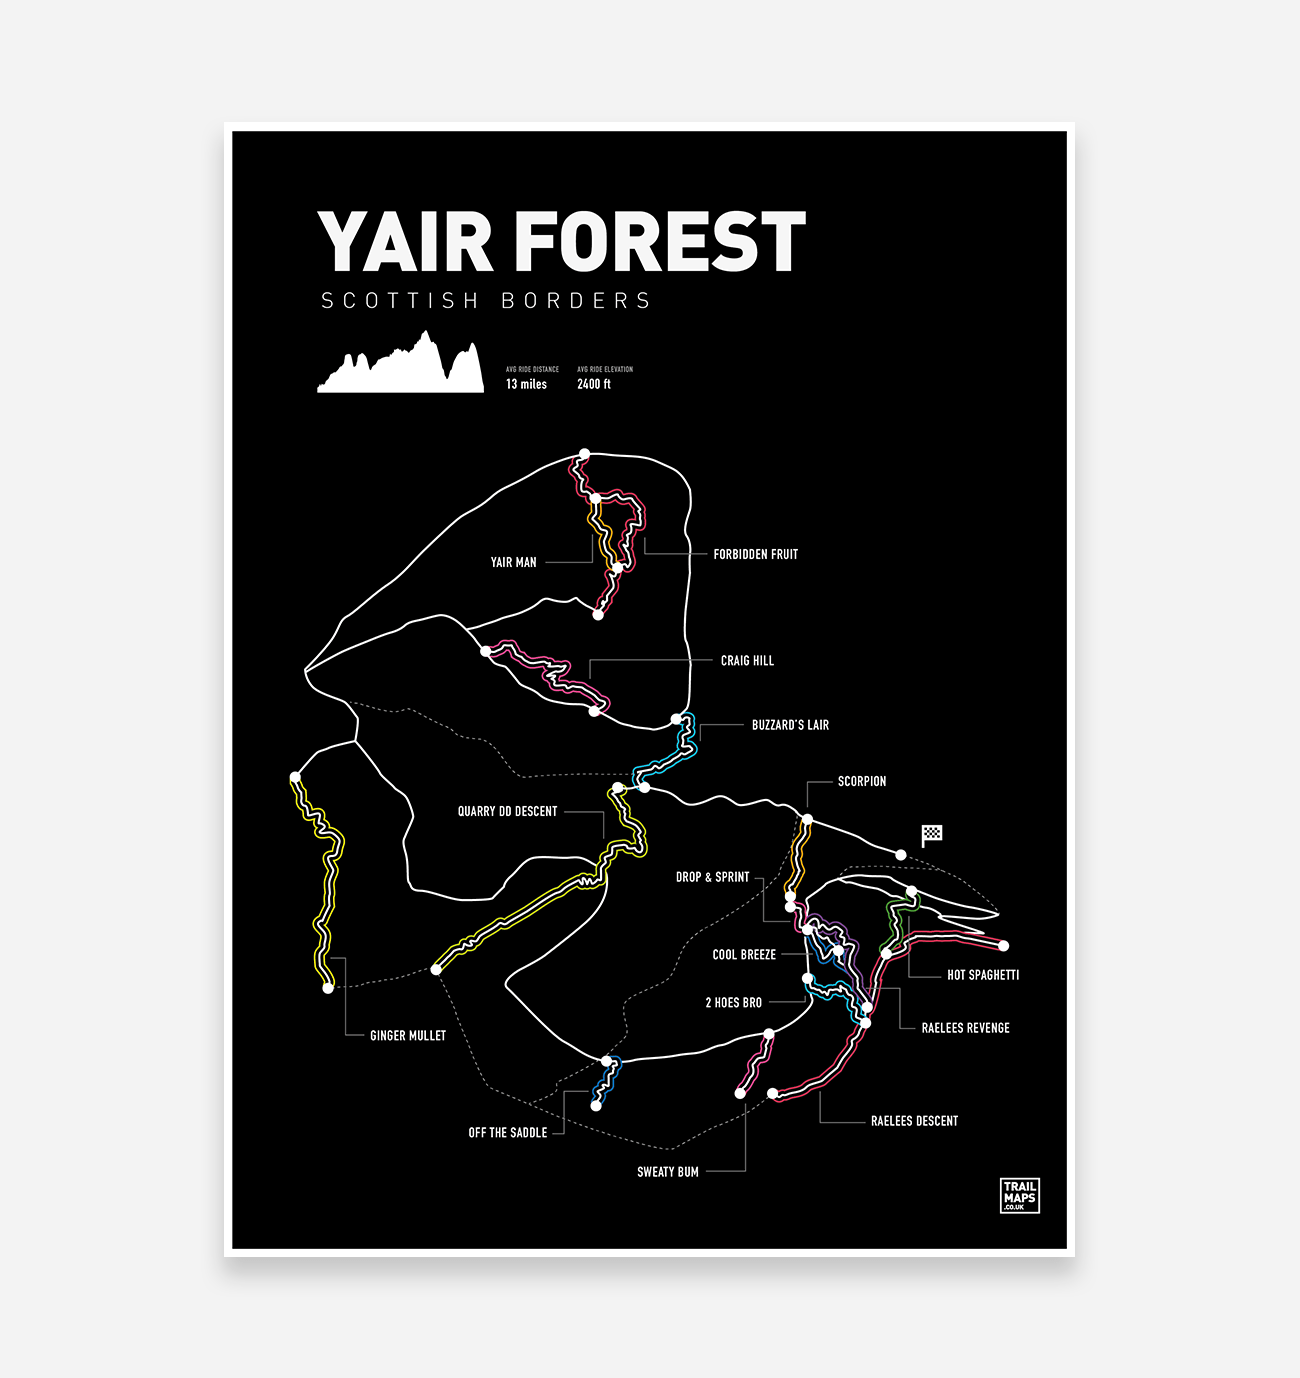 Yair Forest Art Print - TrailMaps.co.uk